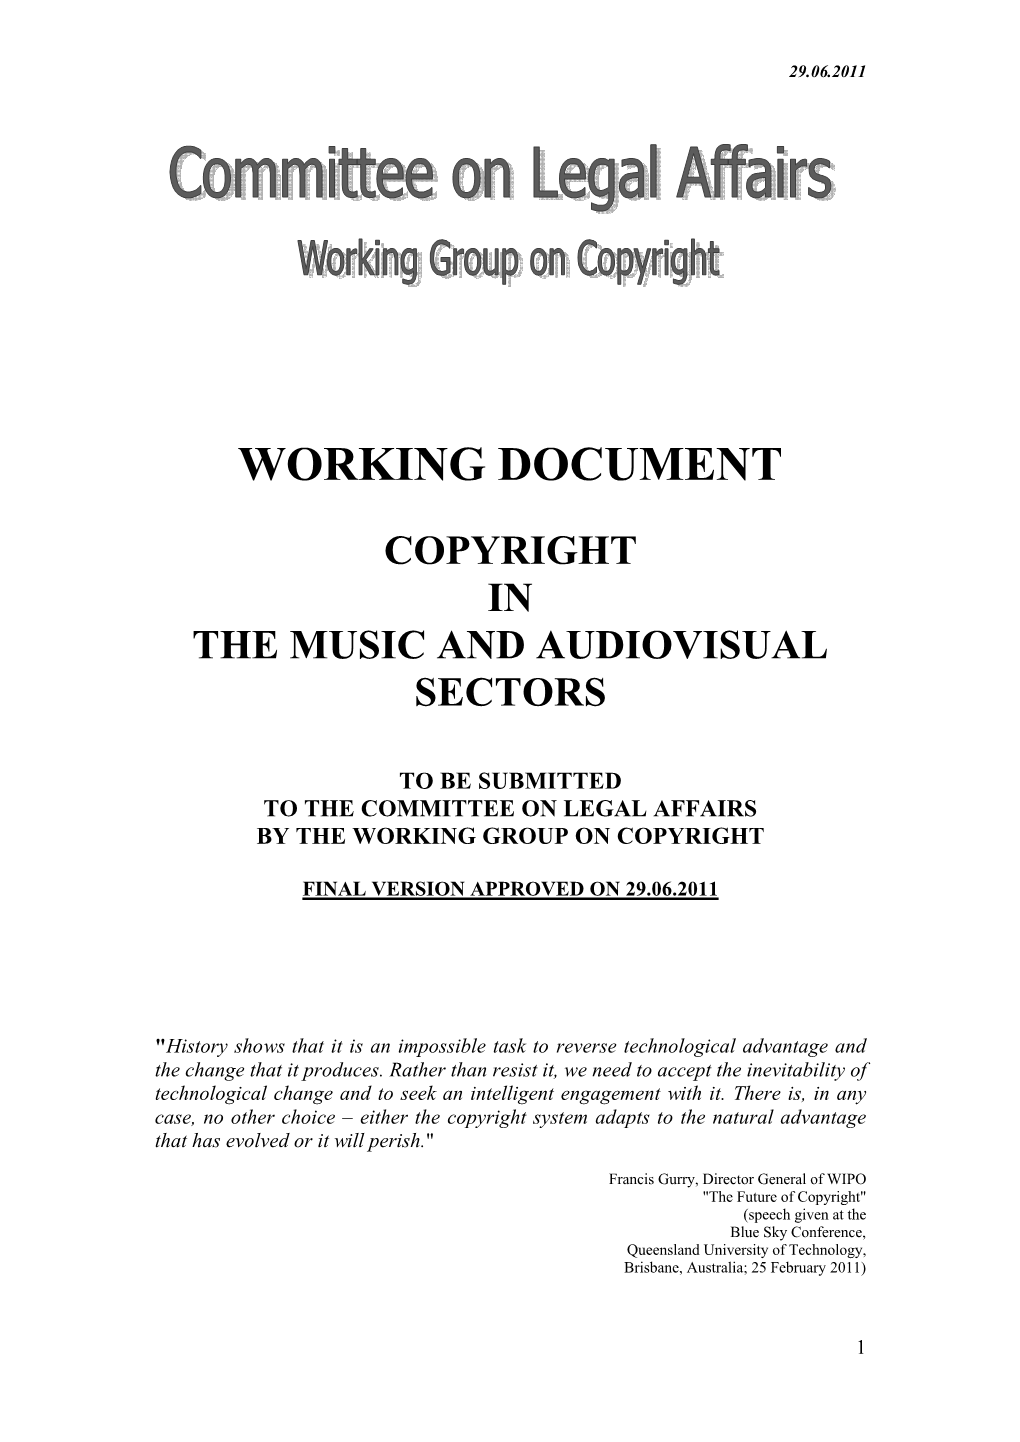 Working Document